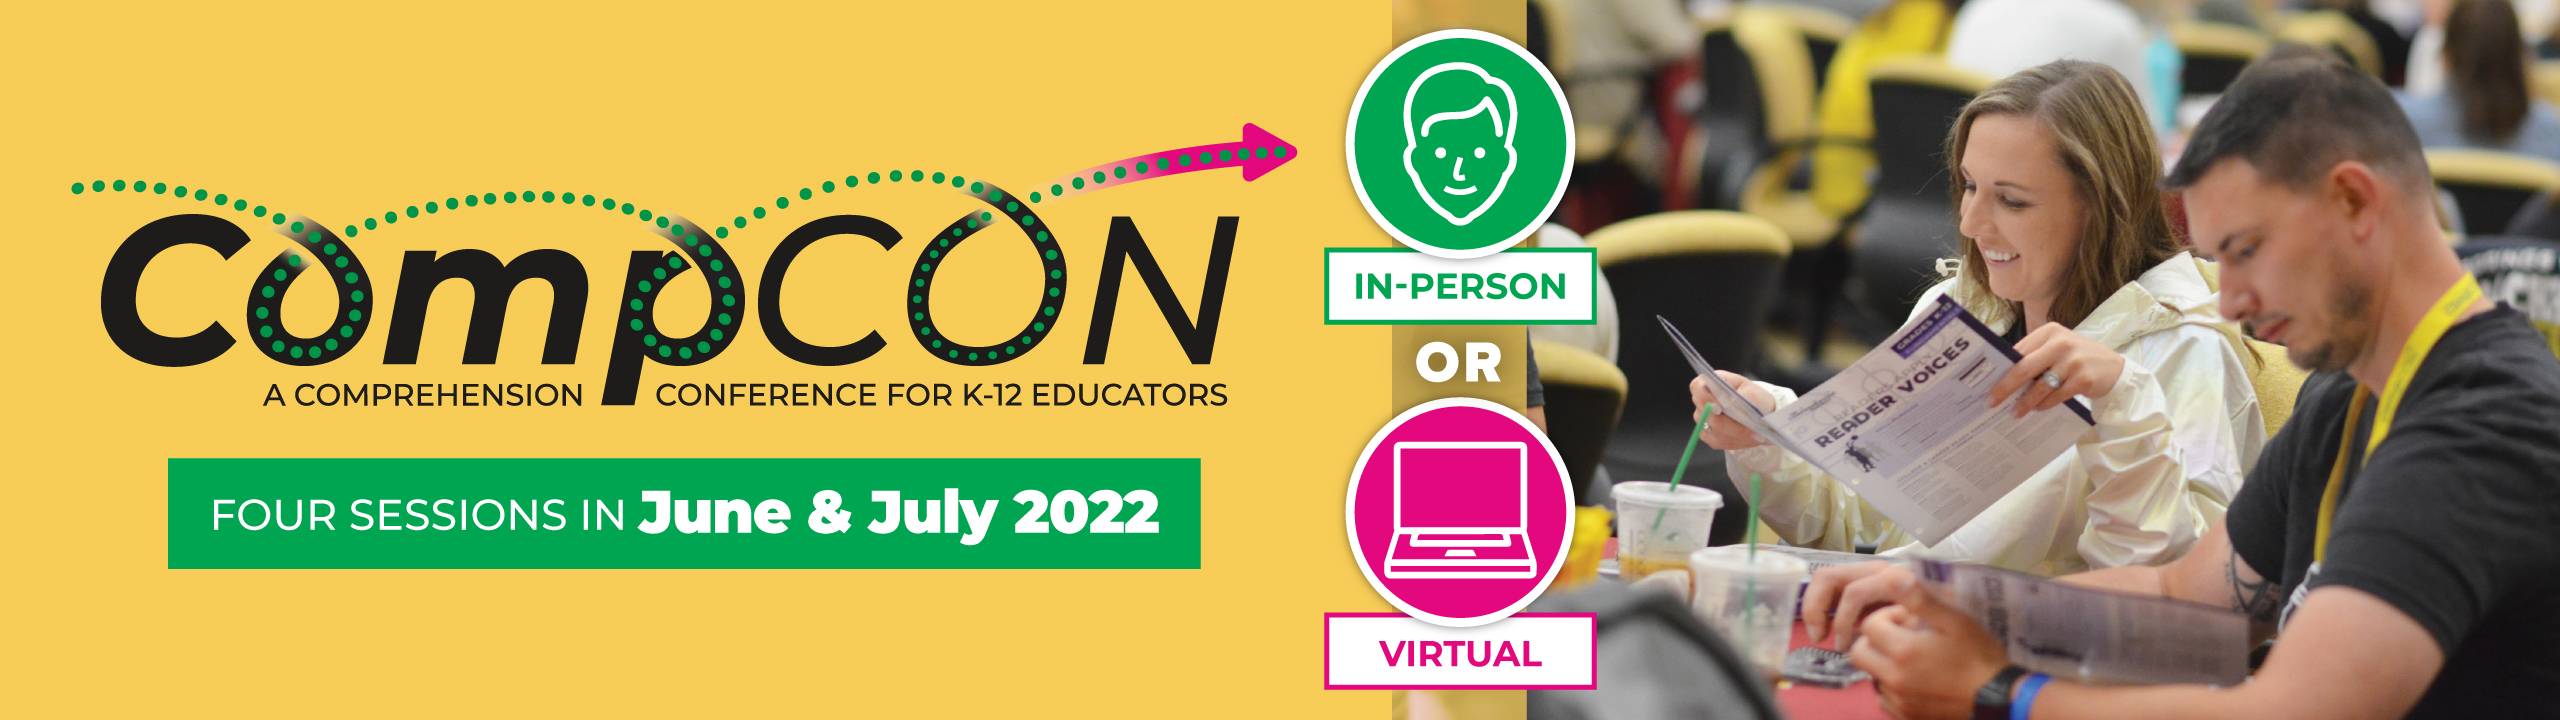 CompCON: A Comprehension Conference for K-12 Educators